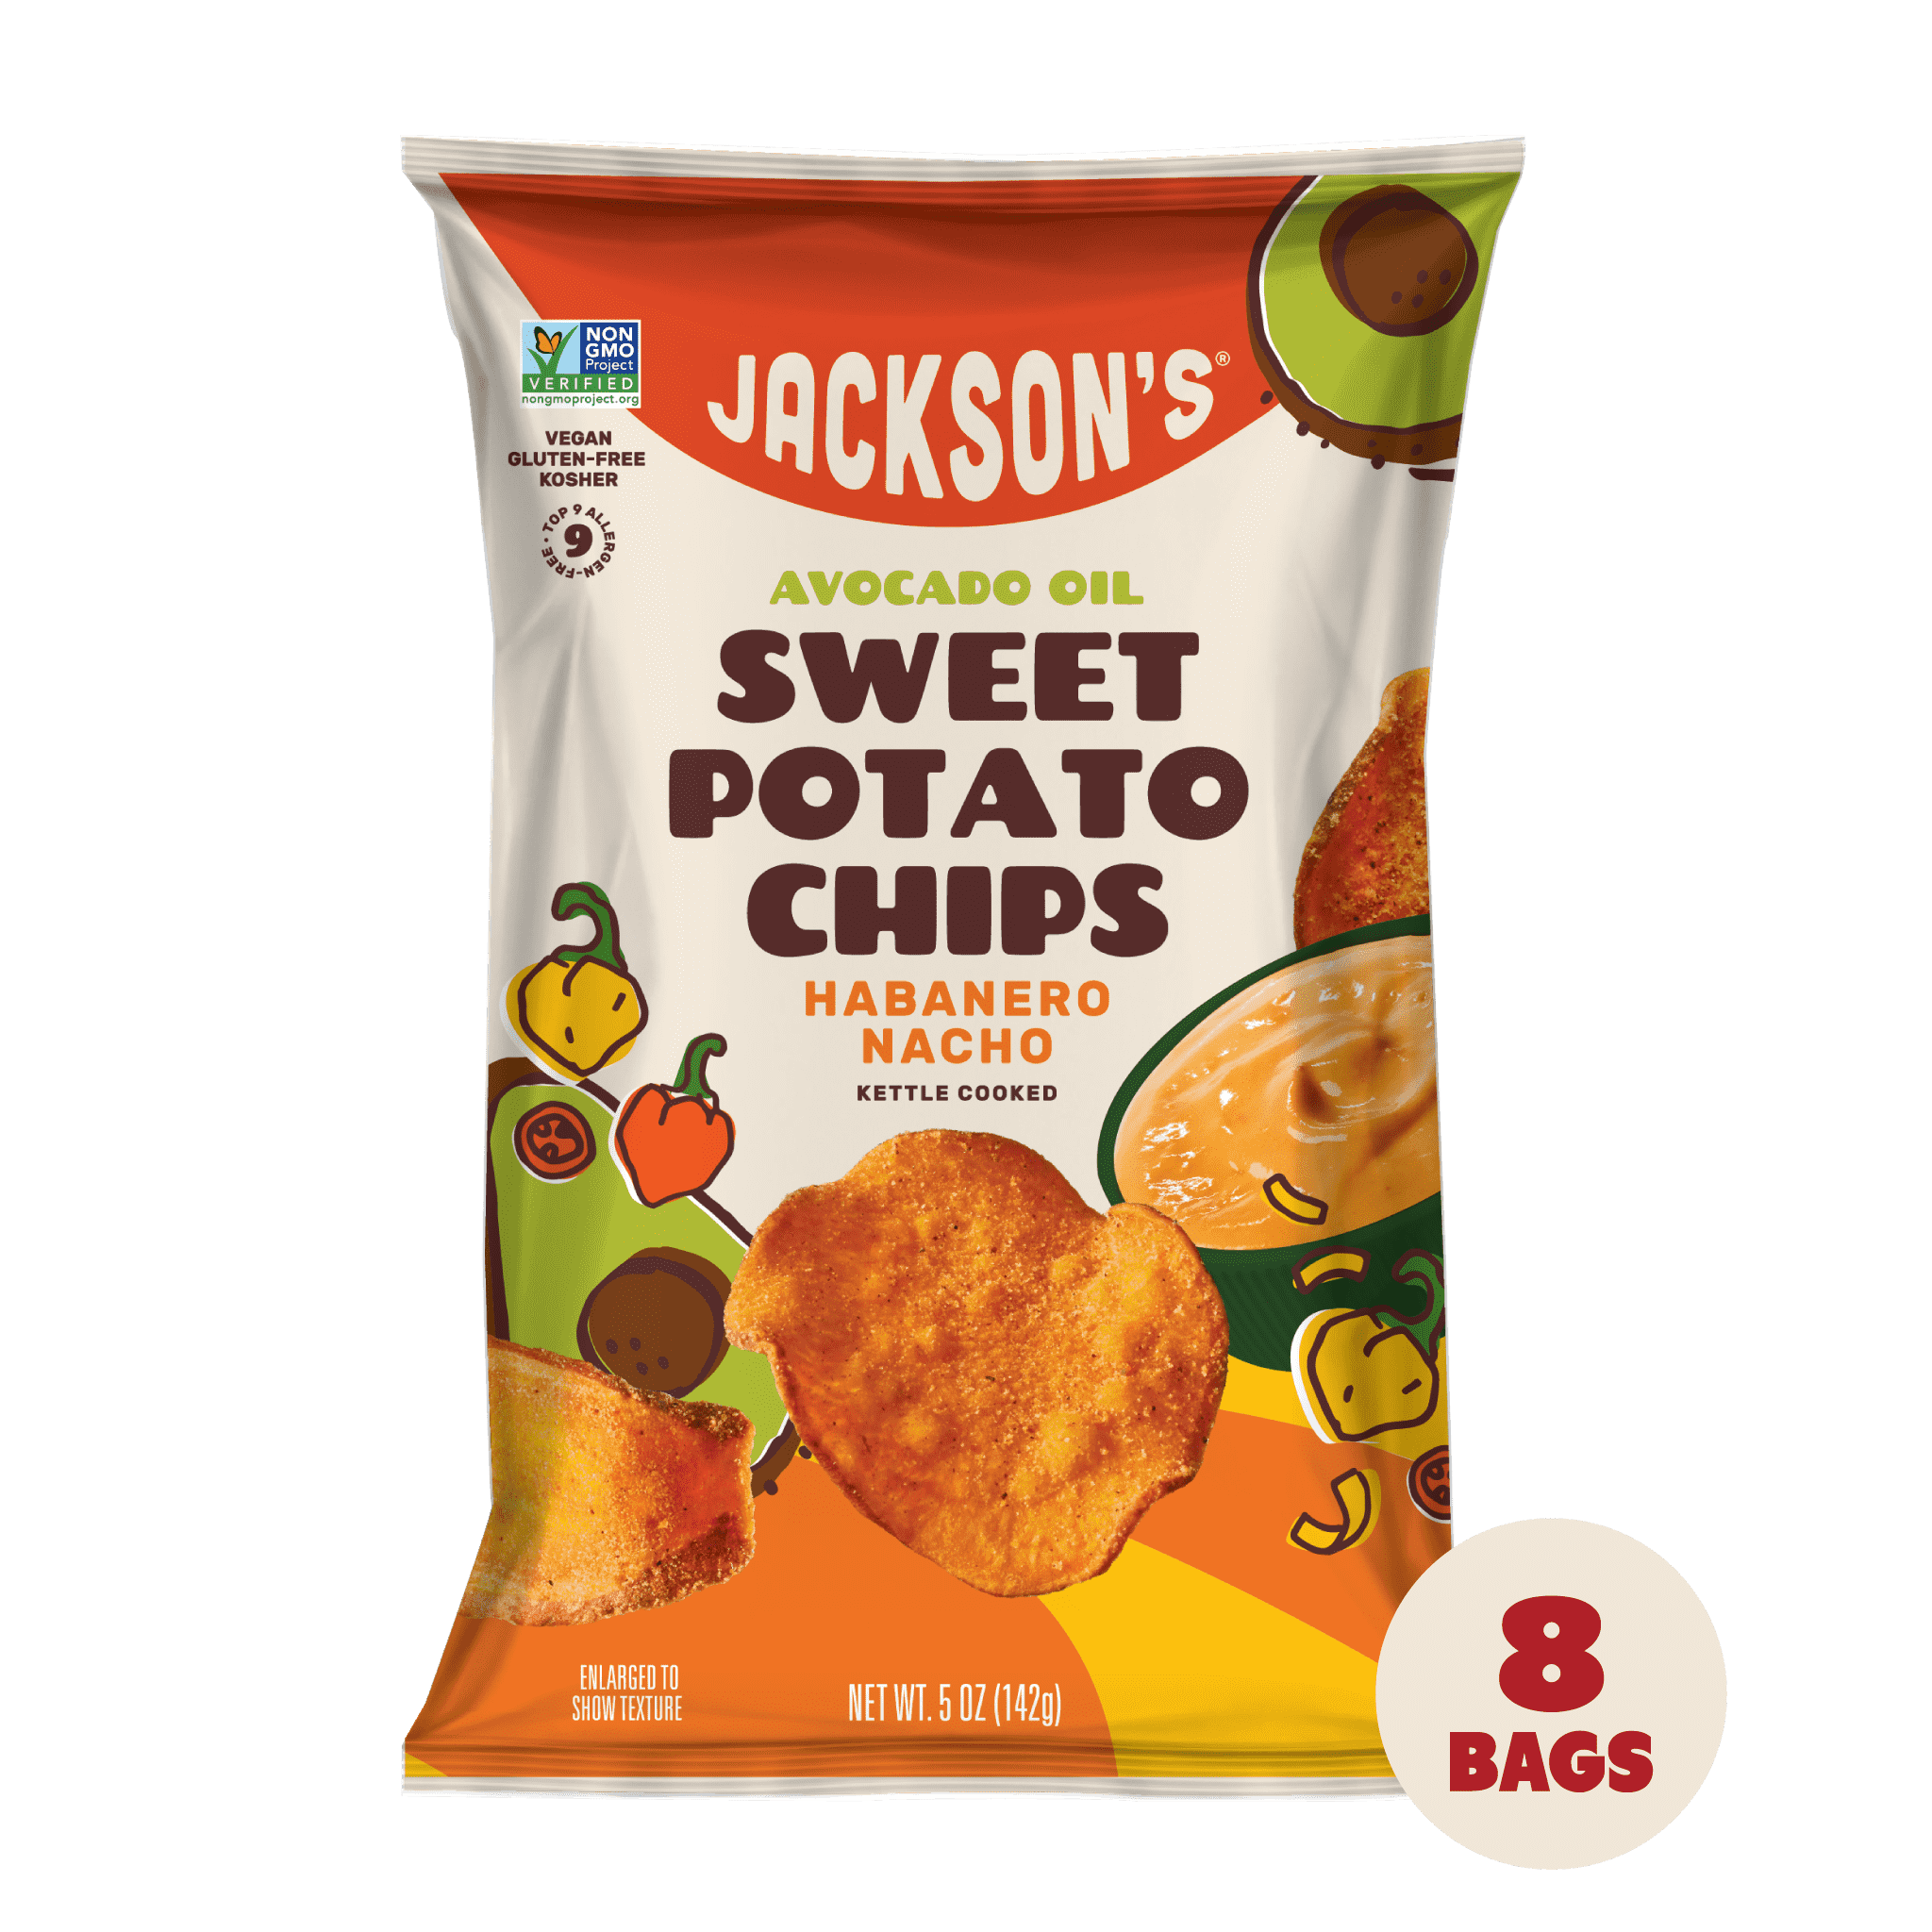 Habanero Nacho Sweet Potato Chips in Avocado Oil 5oz (Pack of 8)